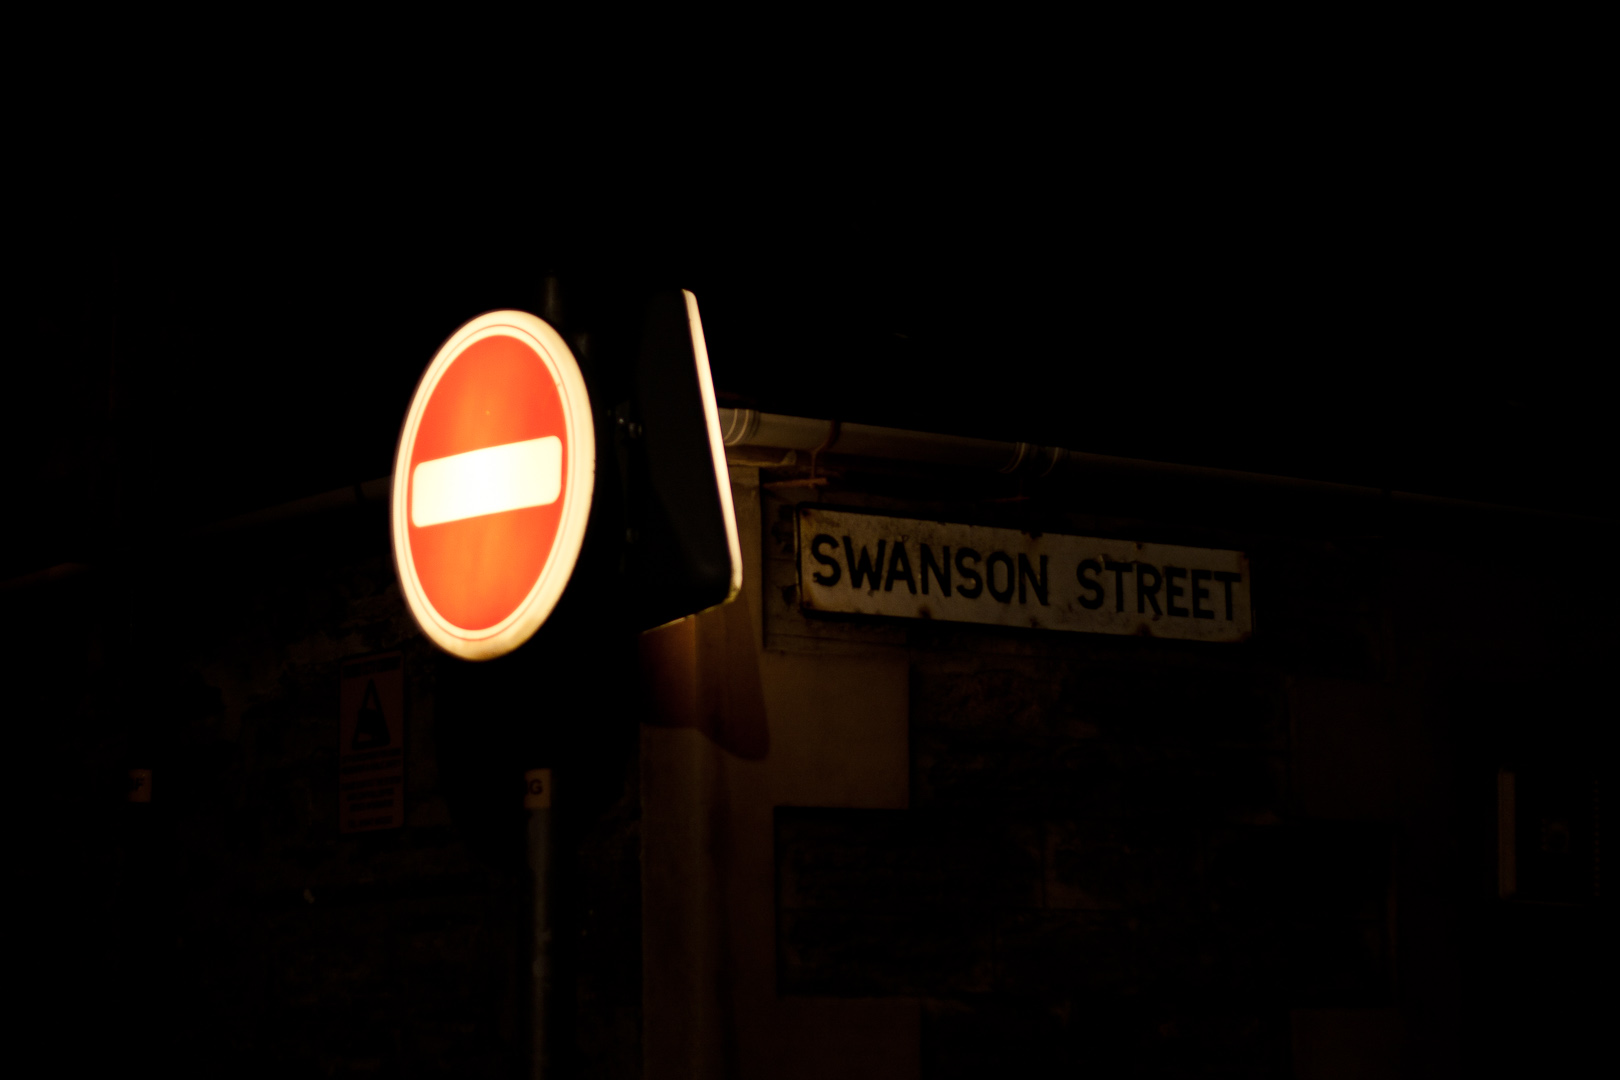 Swanson street